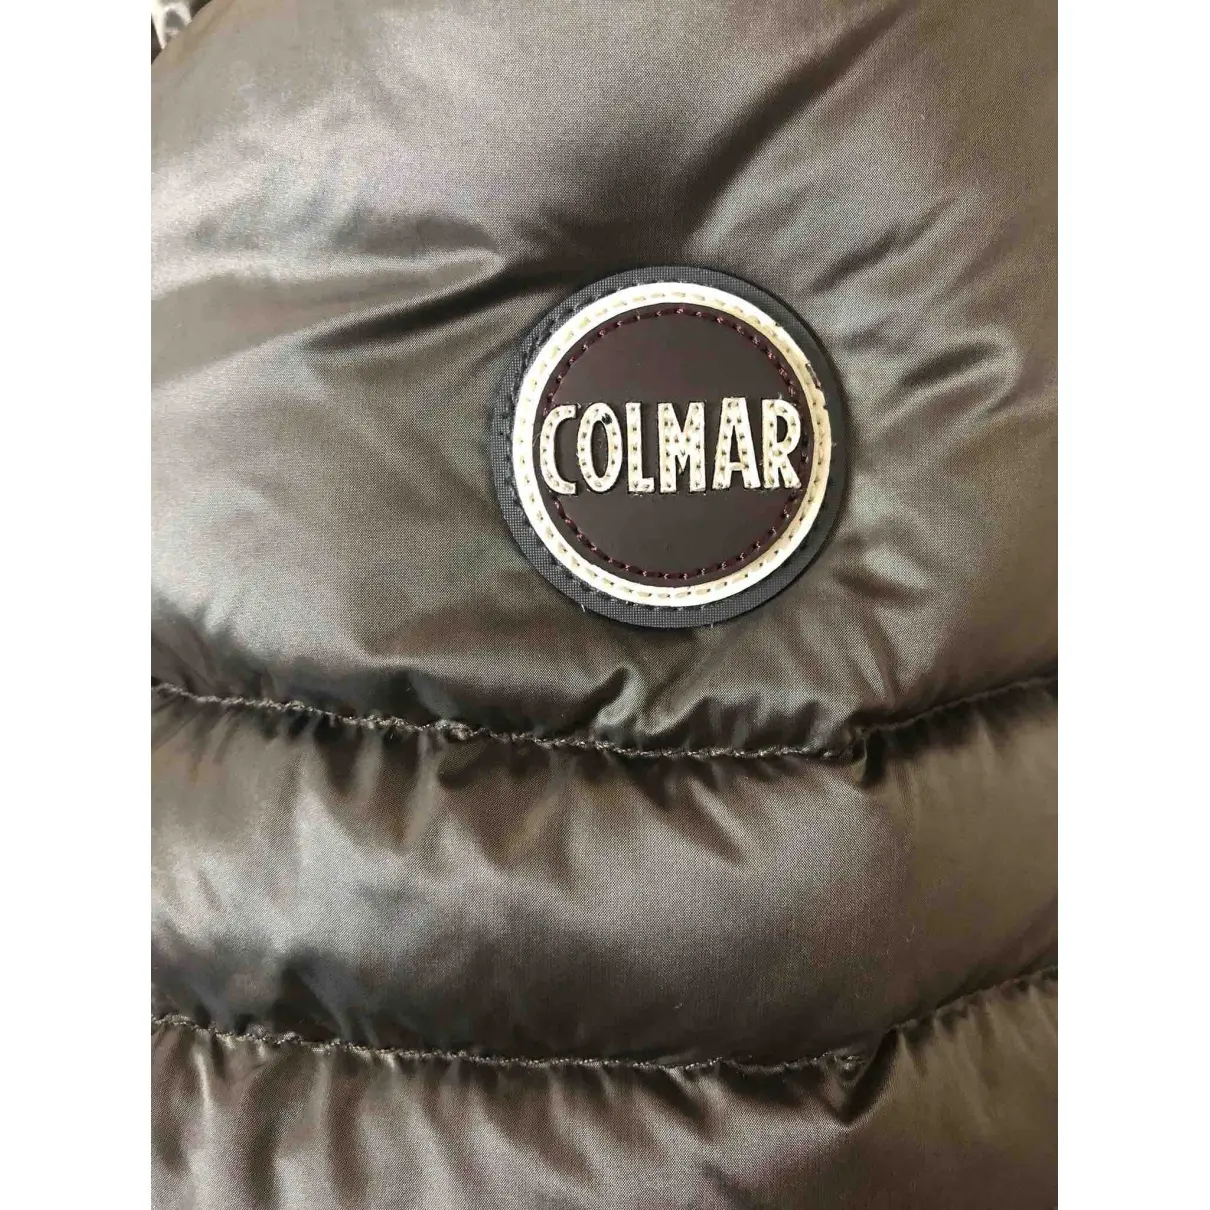 Buy Colmar Jacket online